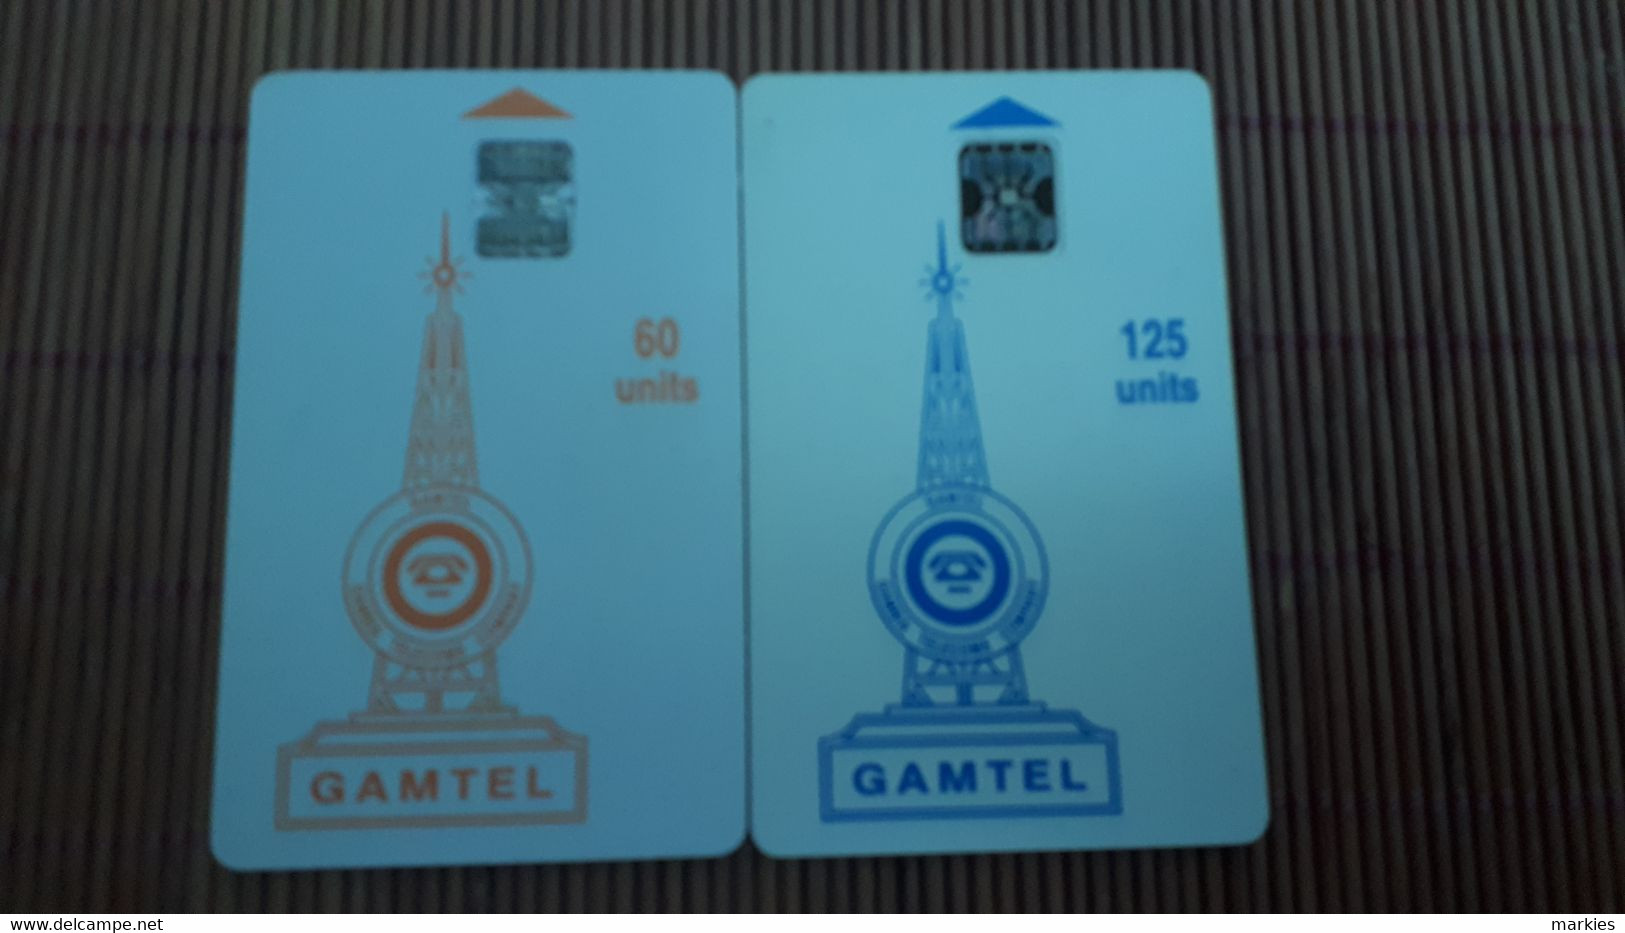 2 Phonecards Gambia 60 Units +125 Units Used Rare - Gambia